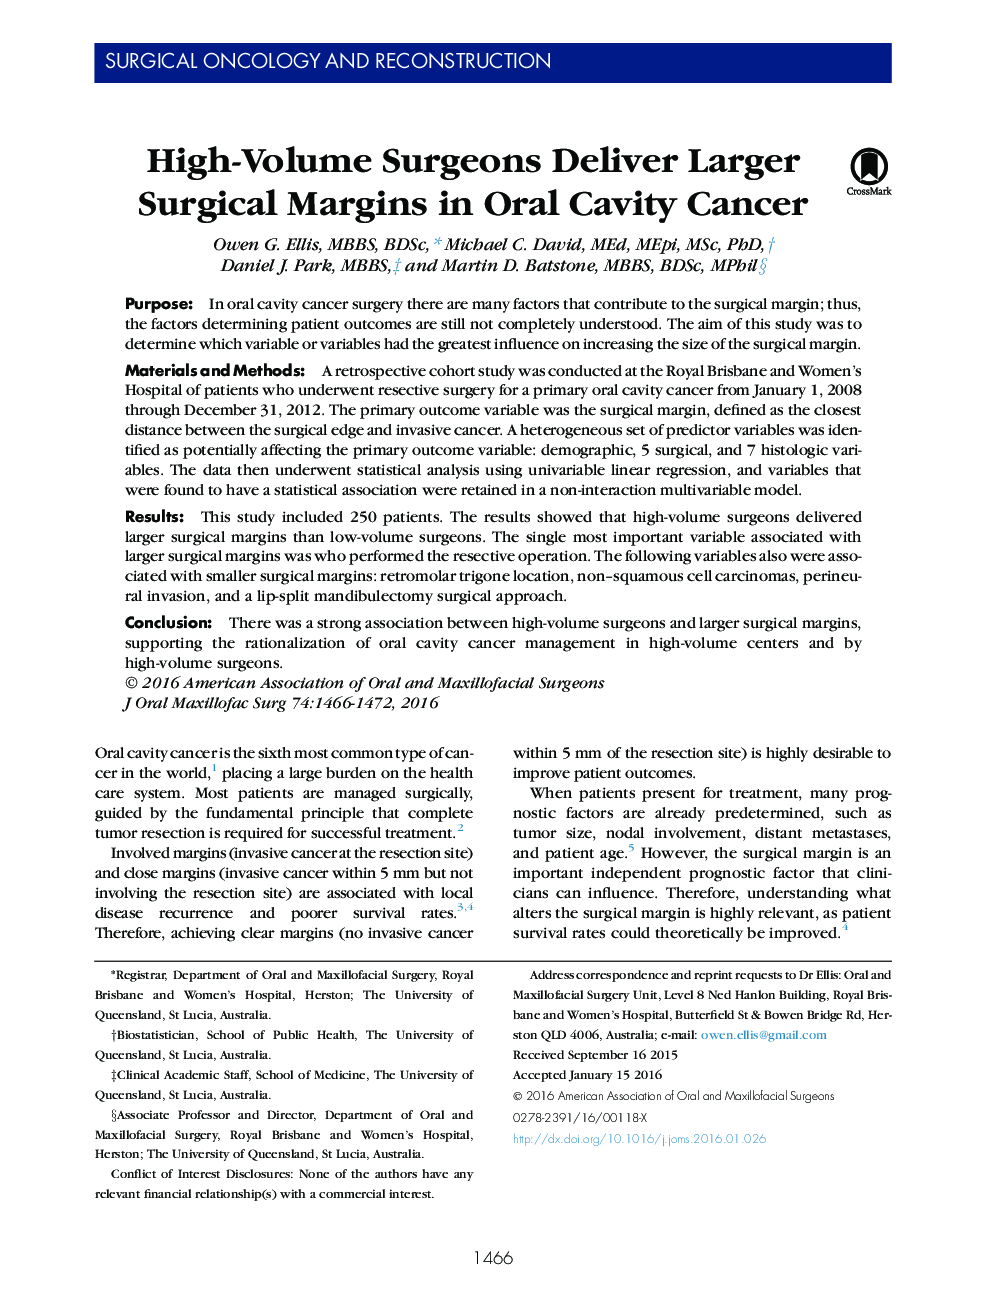 High-Volume Surgeons Deliver Larger Surgical Margins in Oral Cavity Cancer 